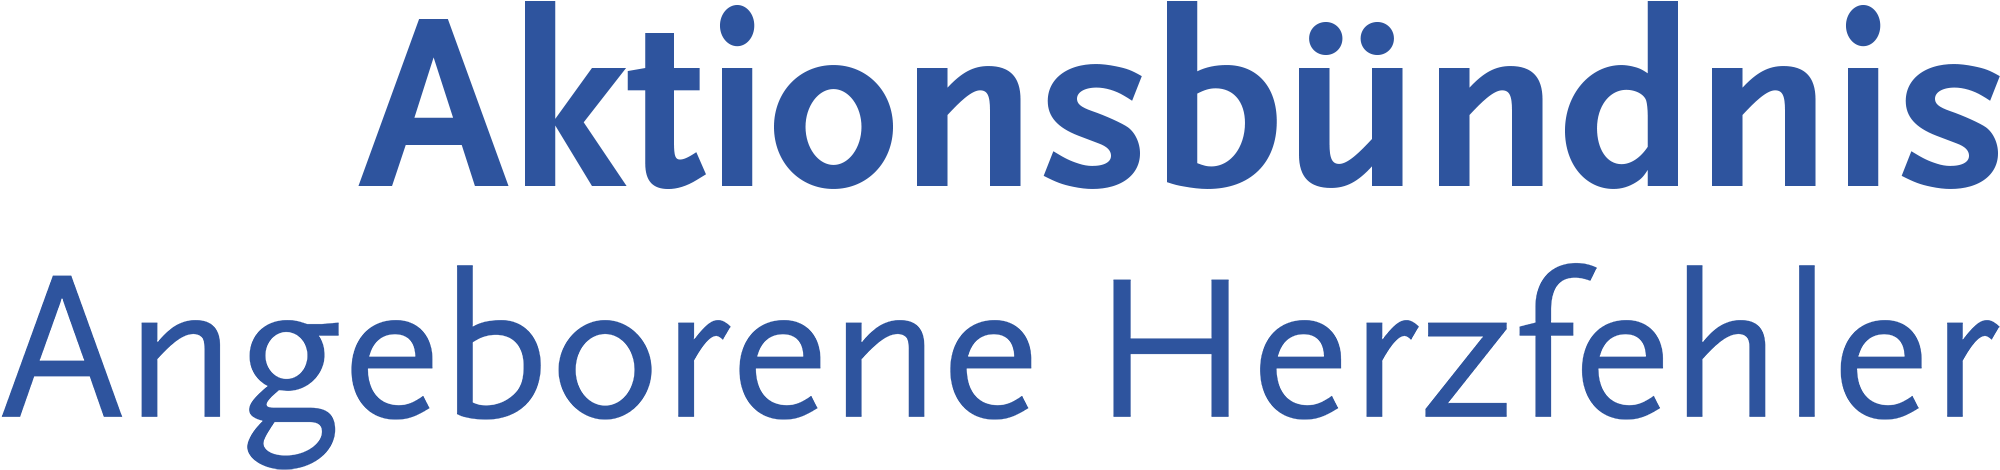 Aktionsbündins Angeborene Herzfehler Logo